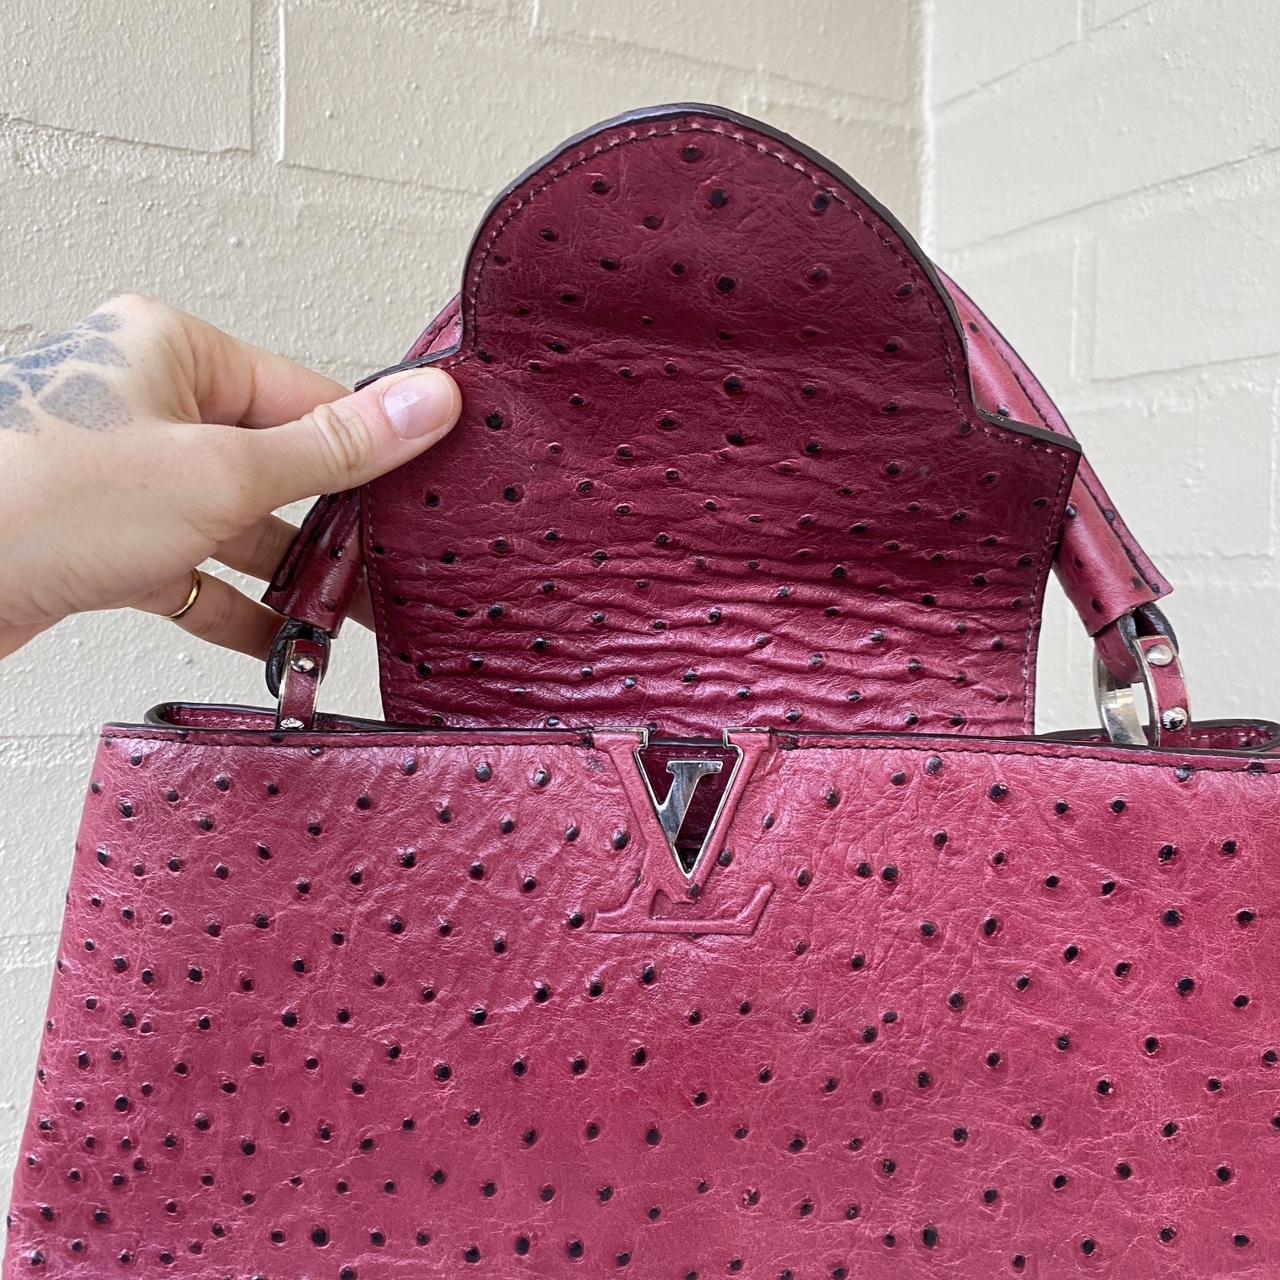 Imitation Luis Vuitton handbag Pink leather with - Depop